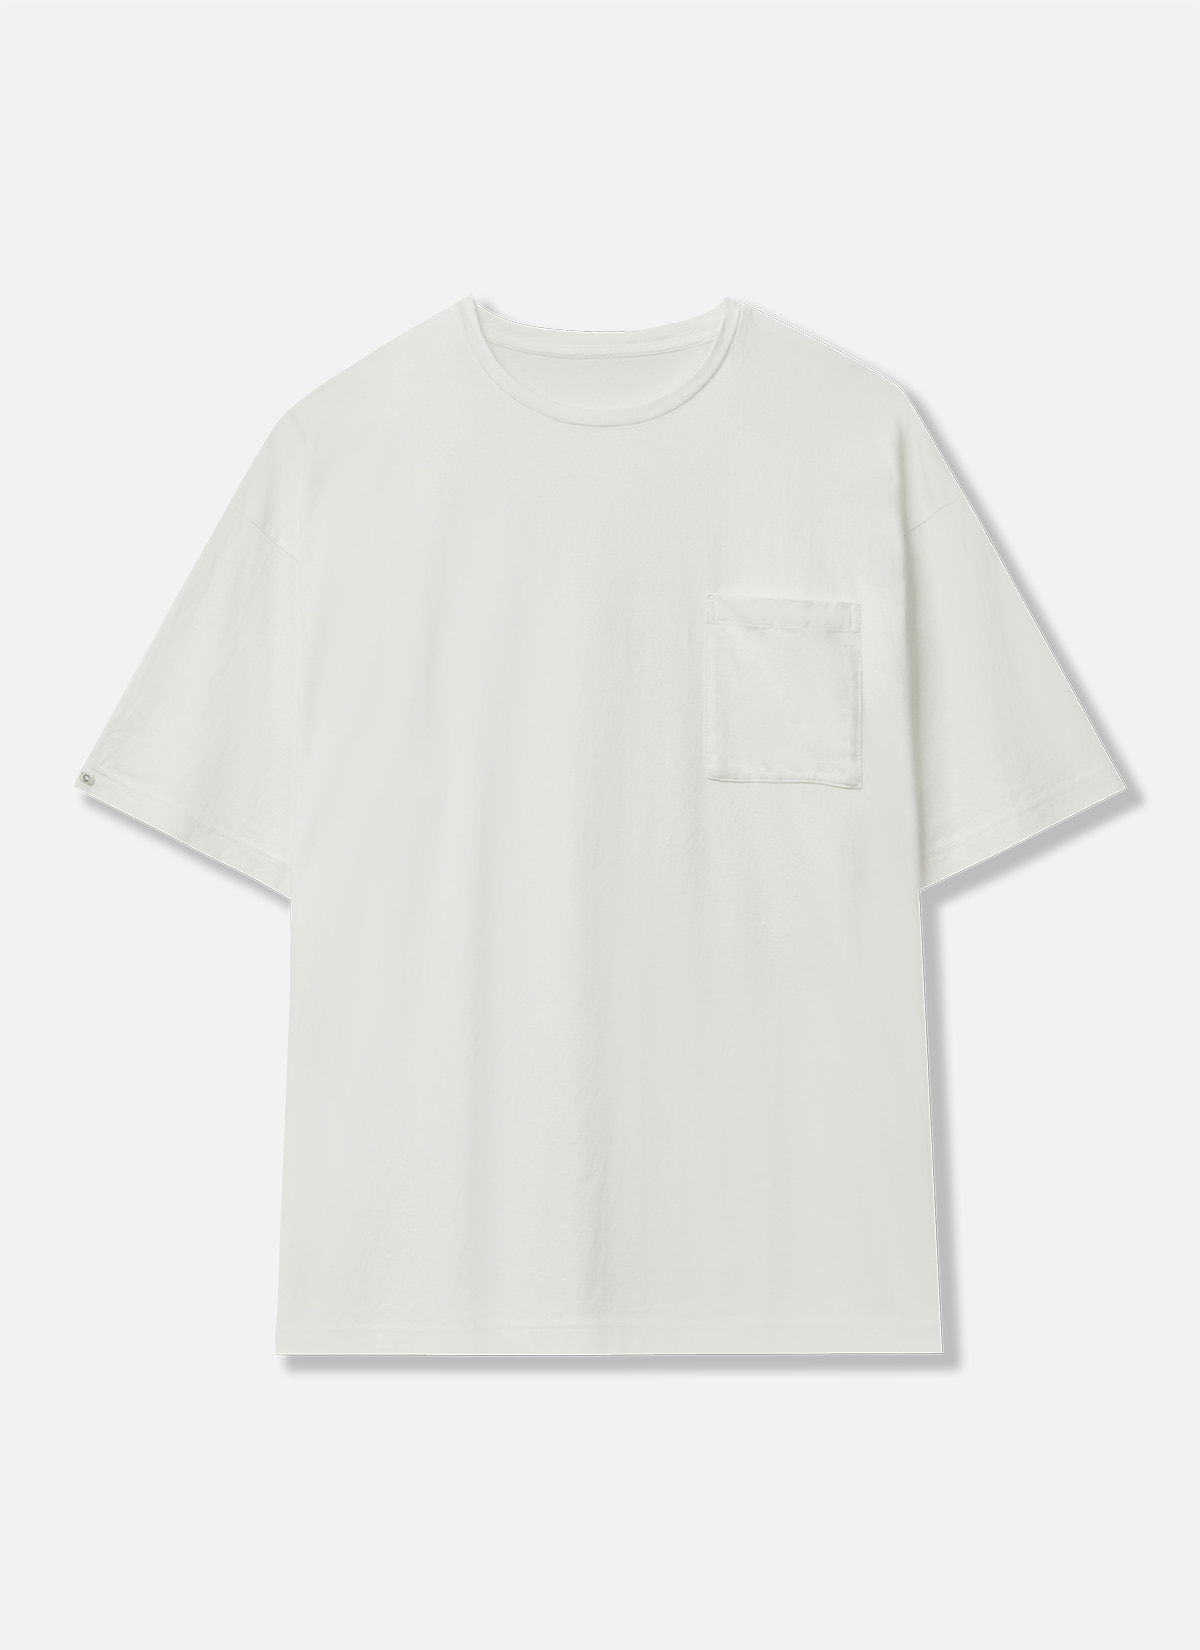 Pocket T-Shirt White